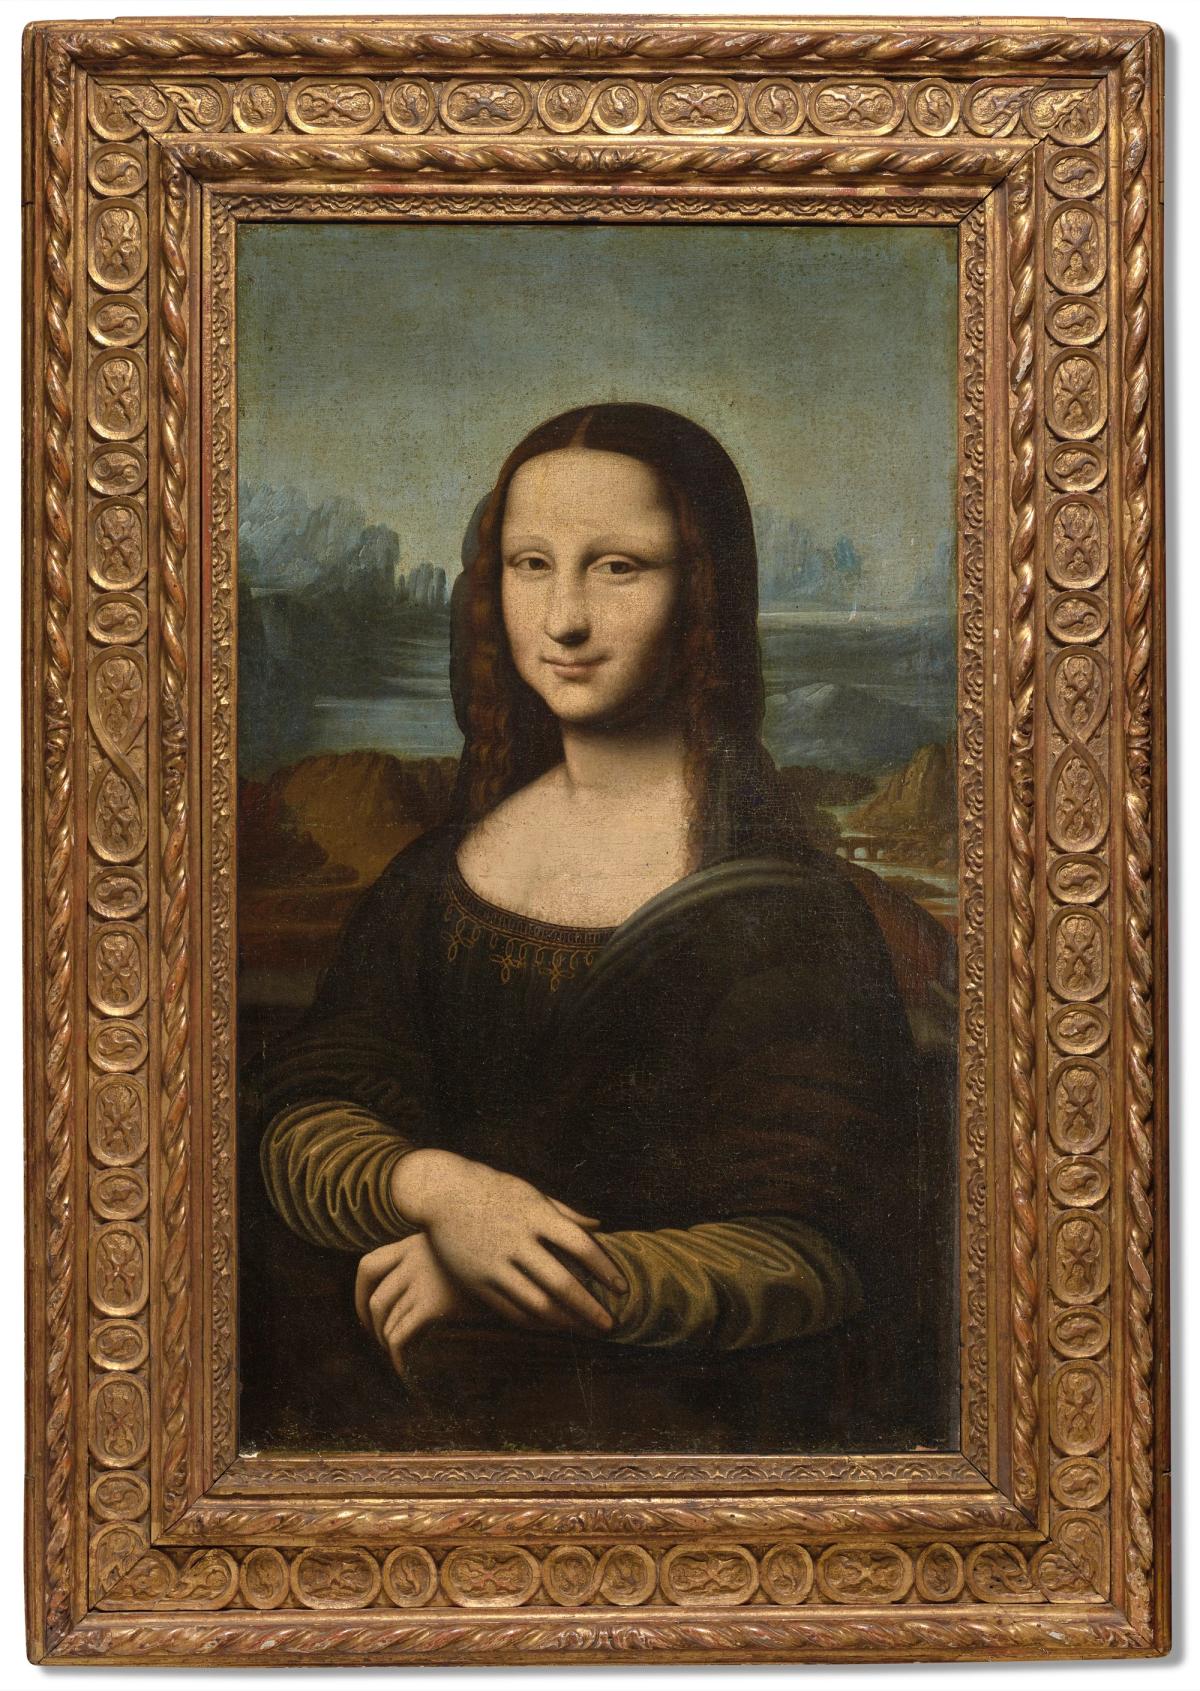 Hekking Mona Lisa courtesy Christie's